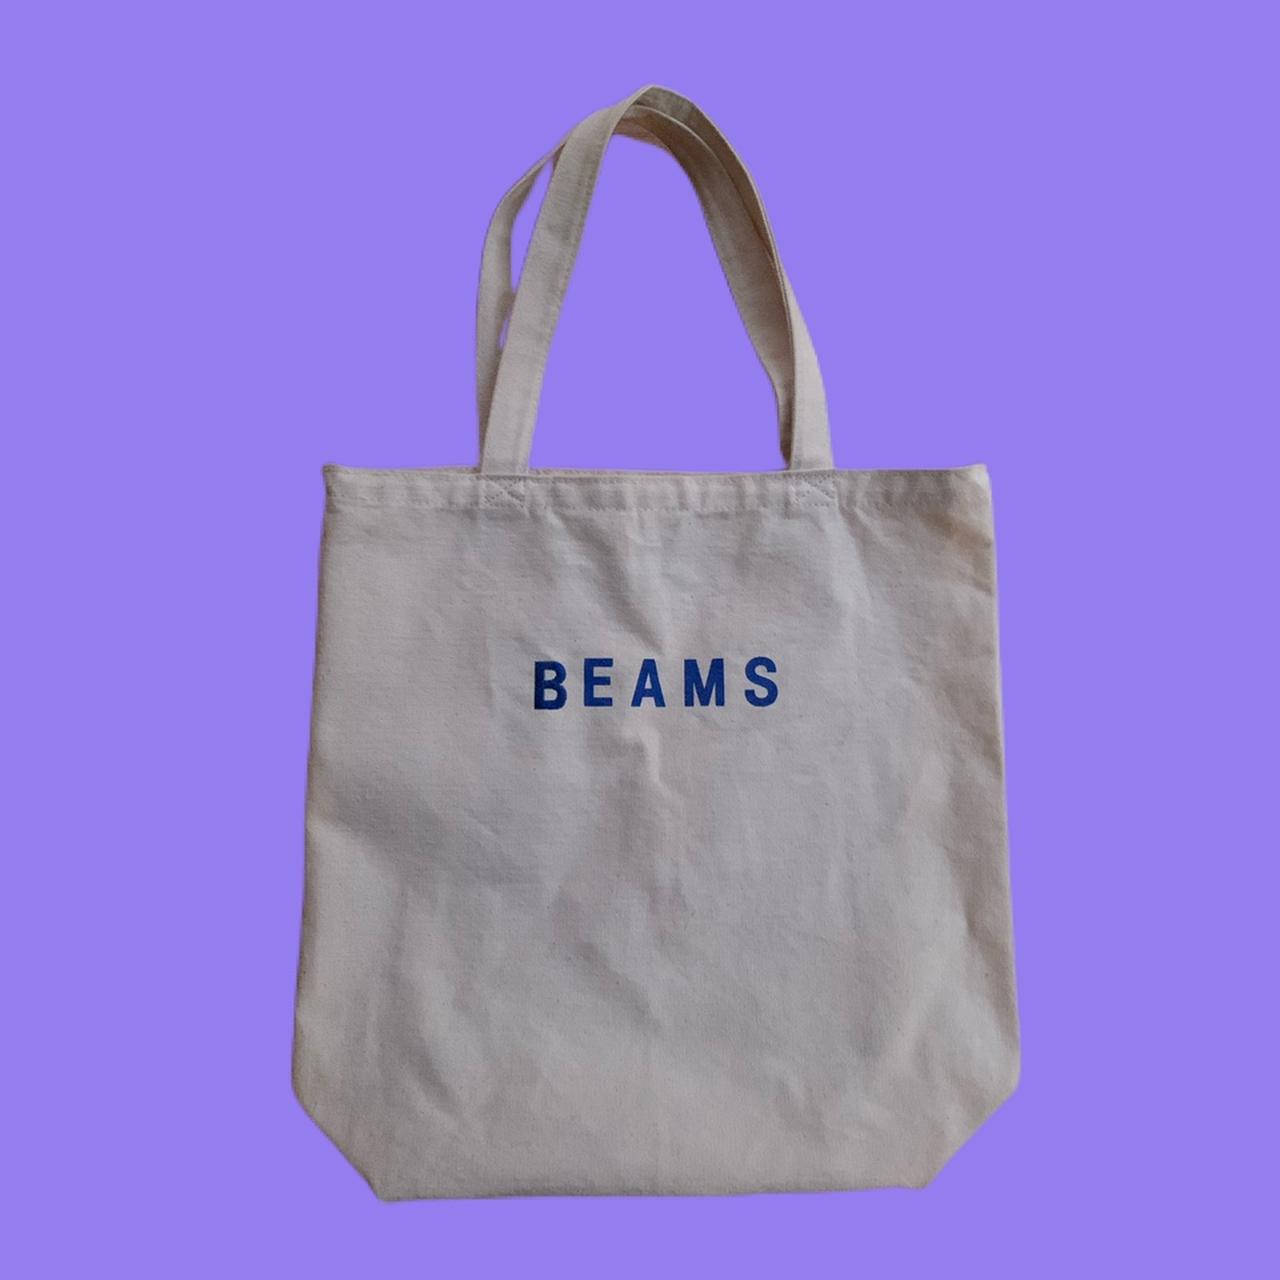 Beams Tote Bag - purchased from beams store in - Depop